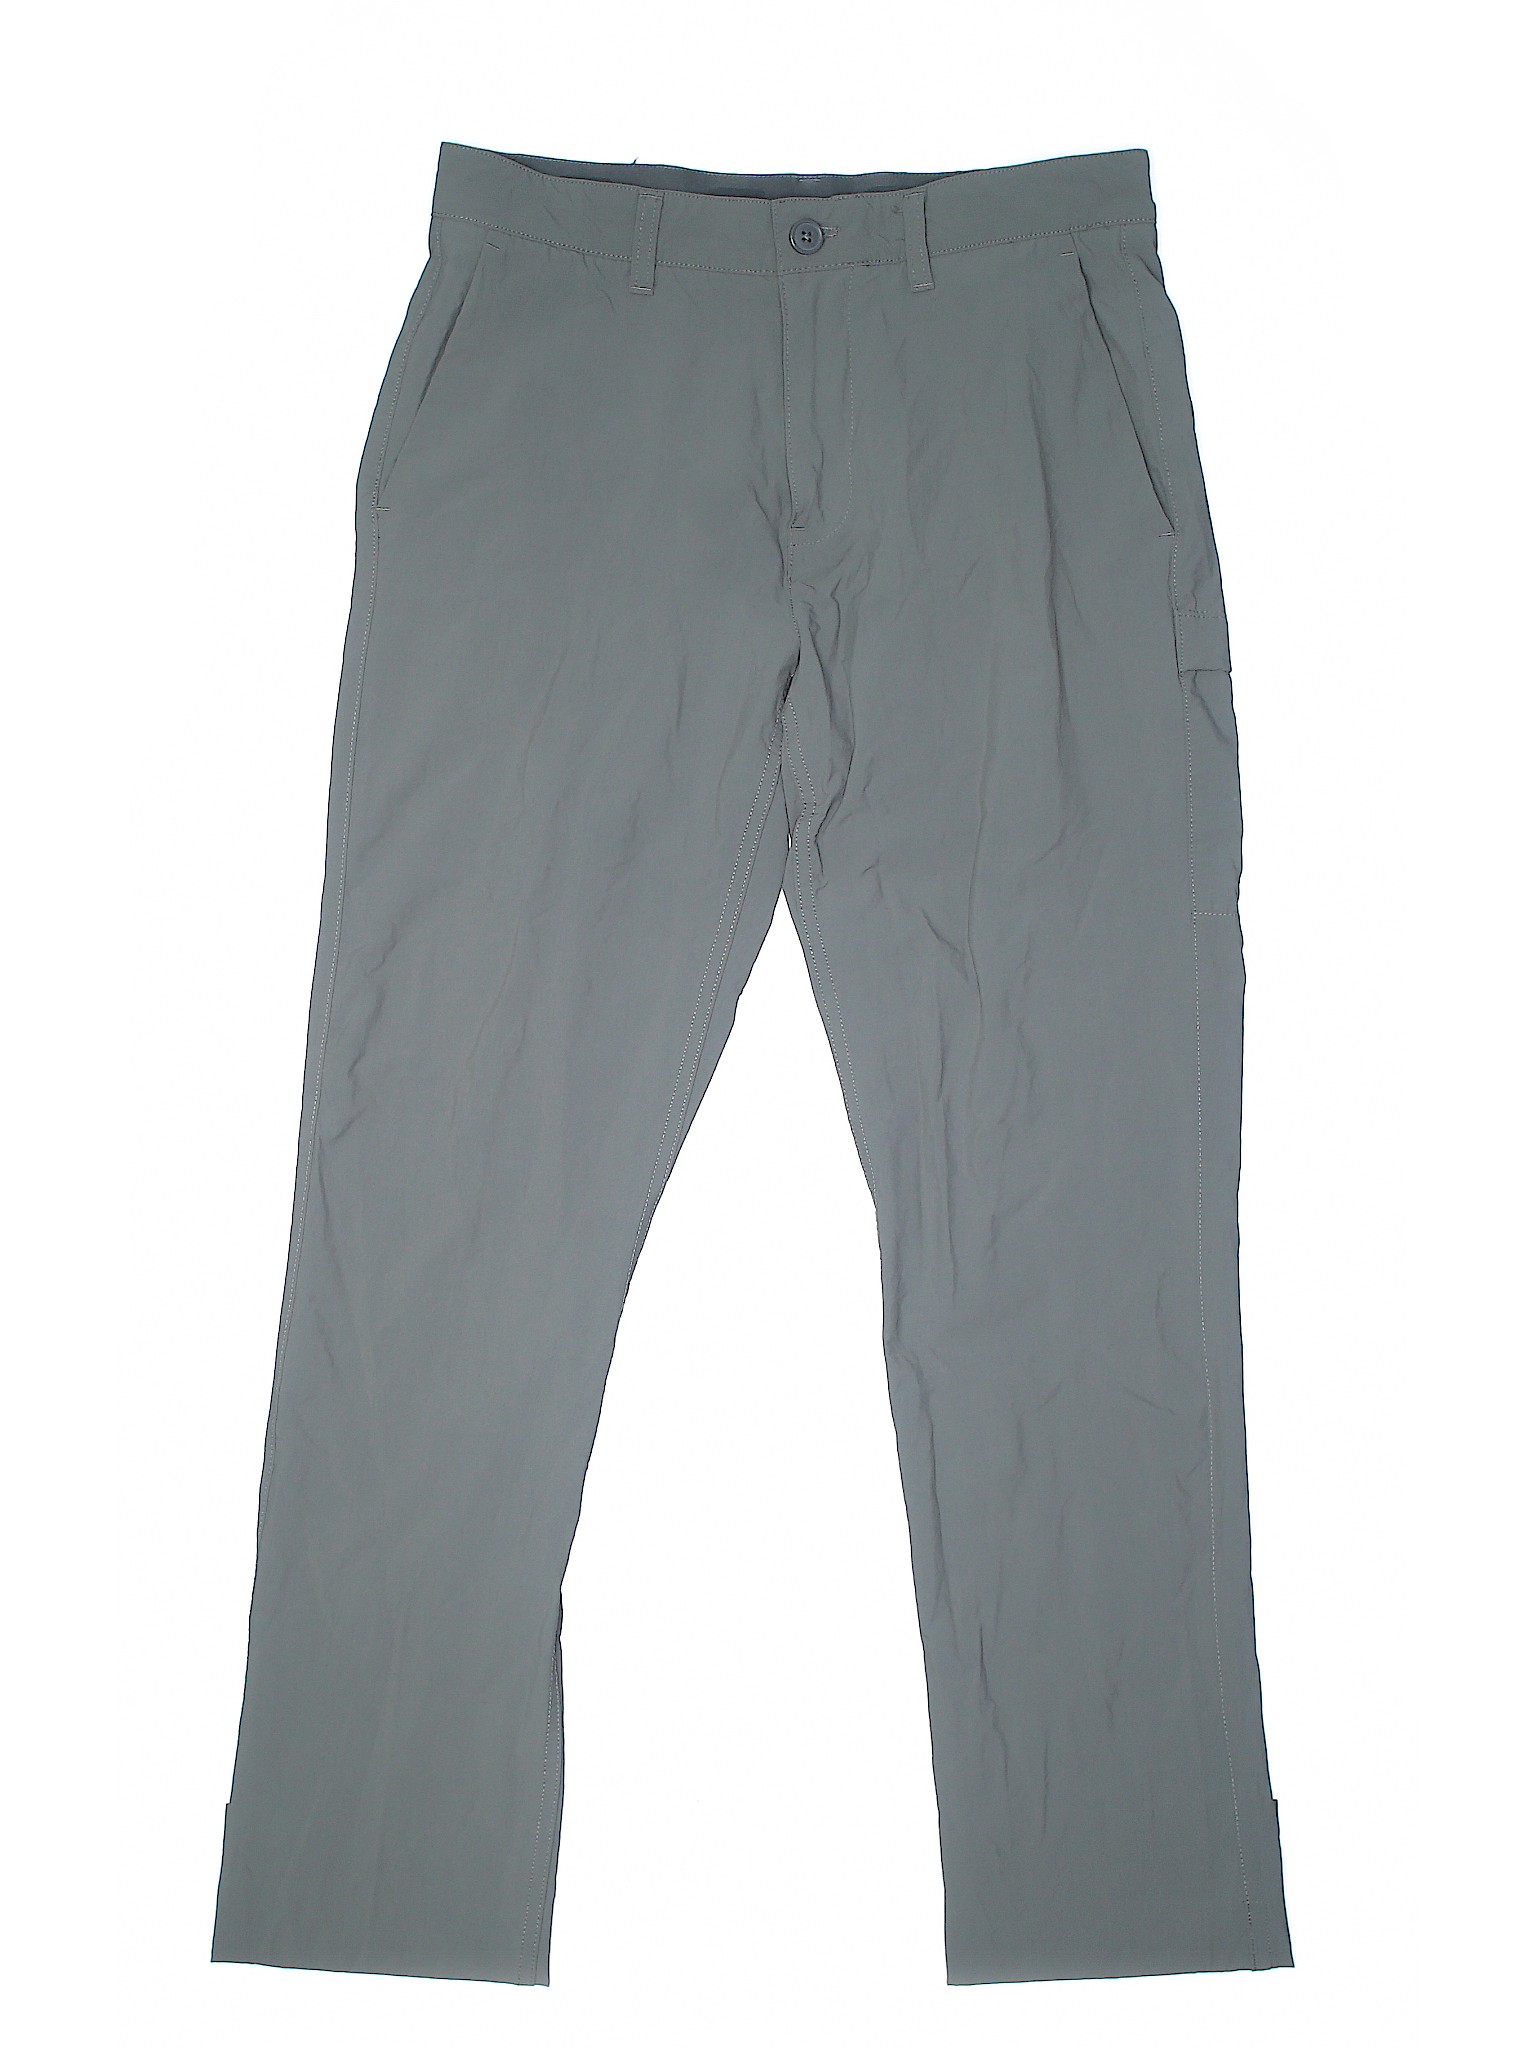 Gap Fit Boys Gray Active Pants 18 | eBay